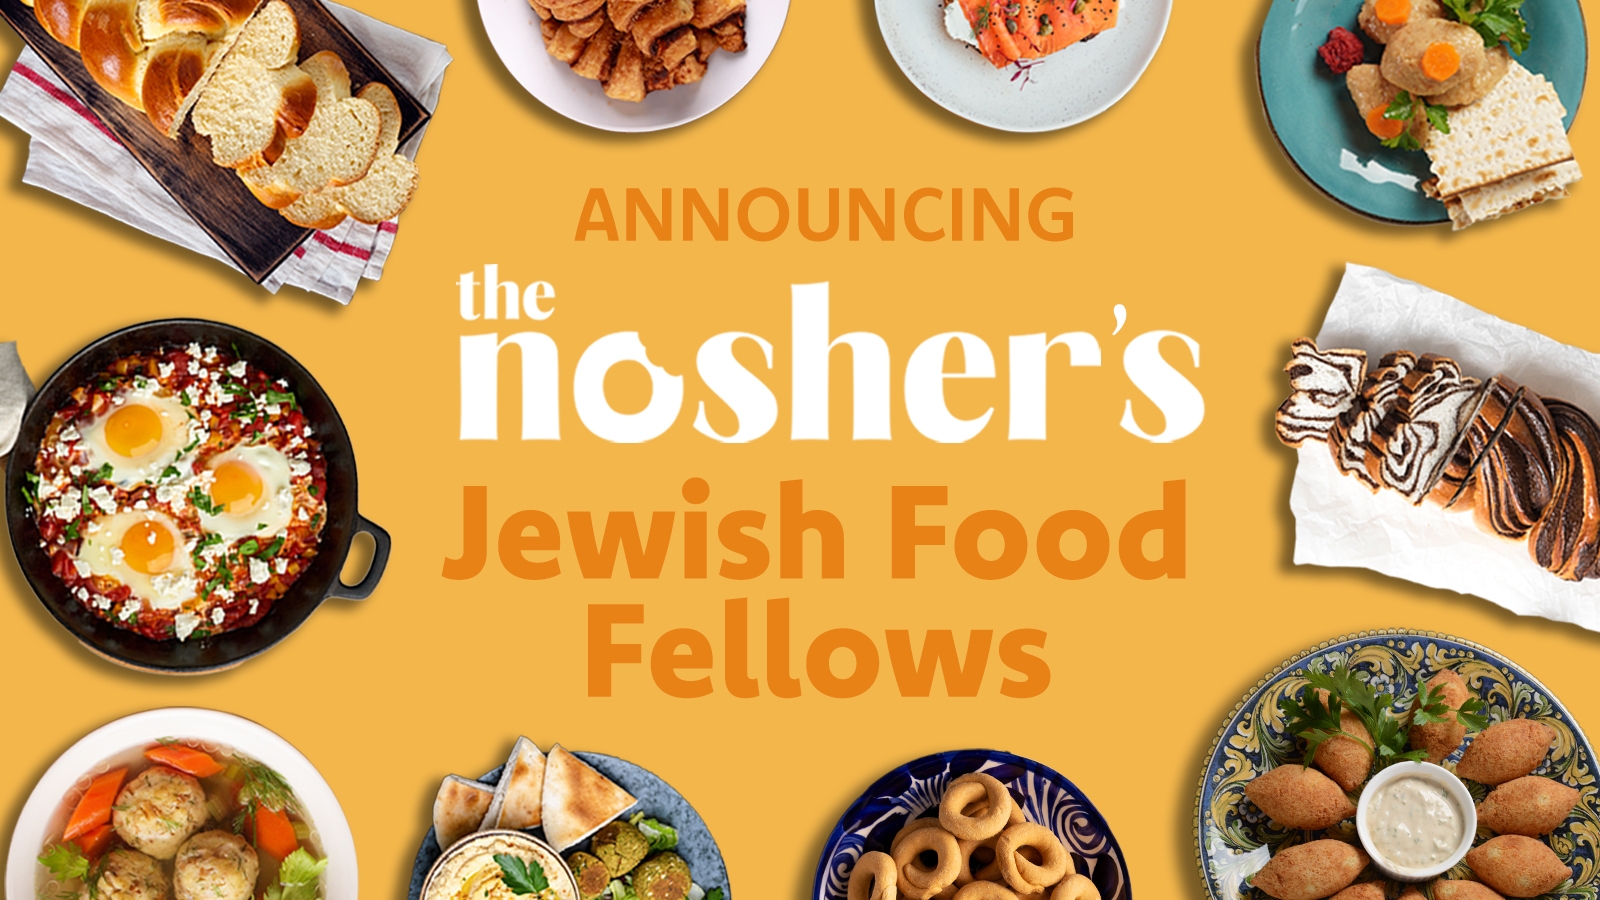 Nosher Food Fellows